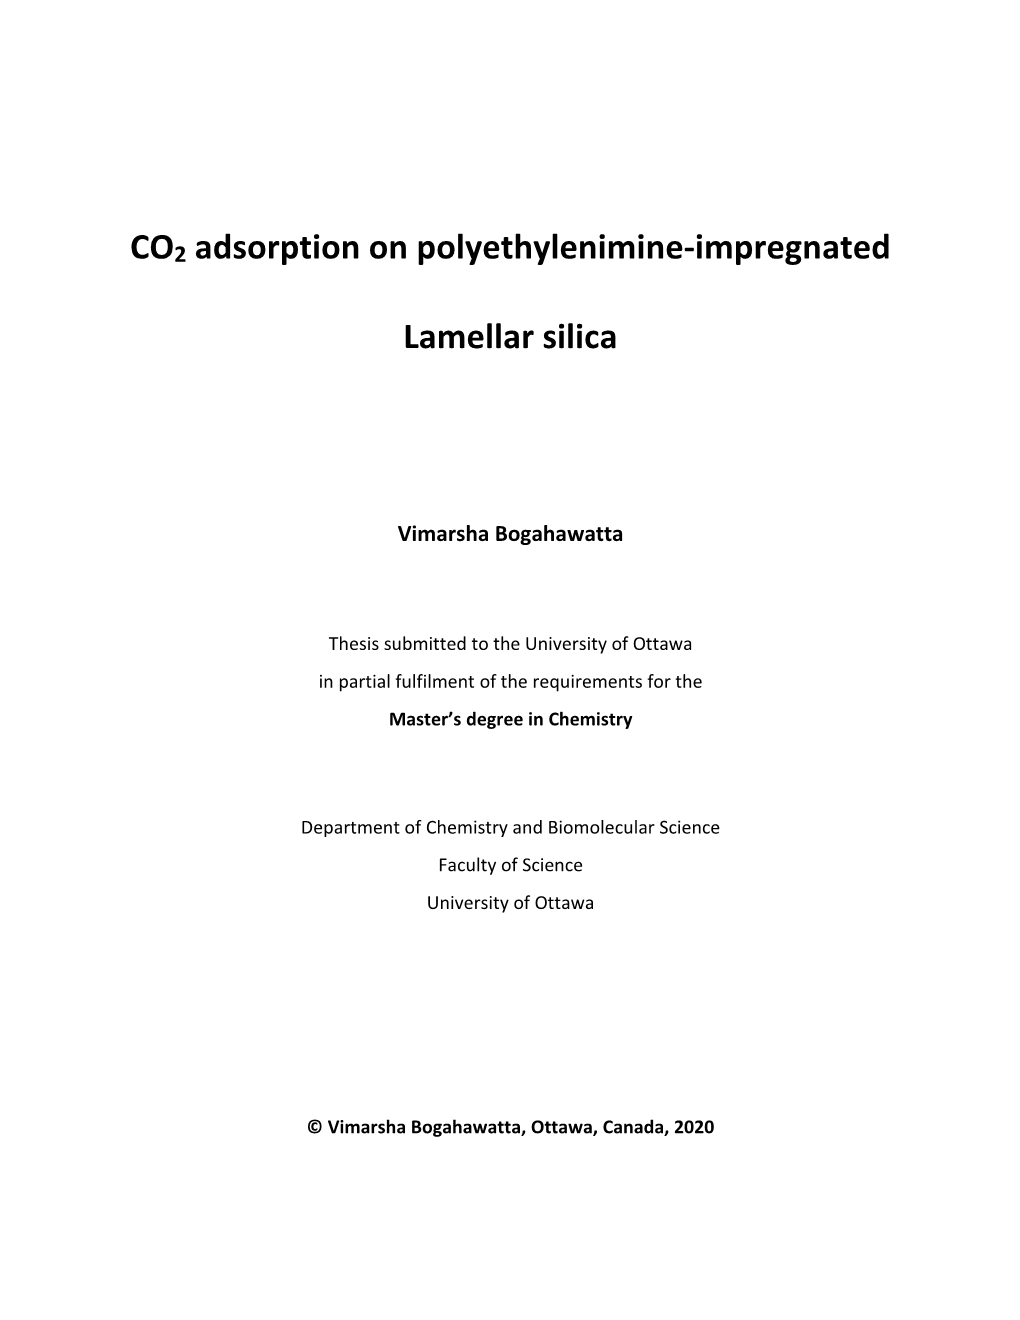 CO2 Adsorption on Polyethylenimine-Impregnated